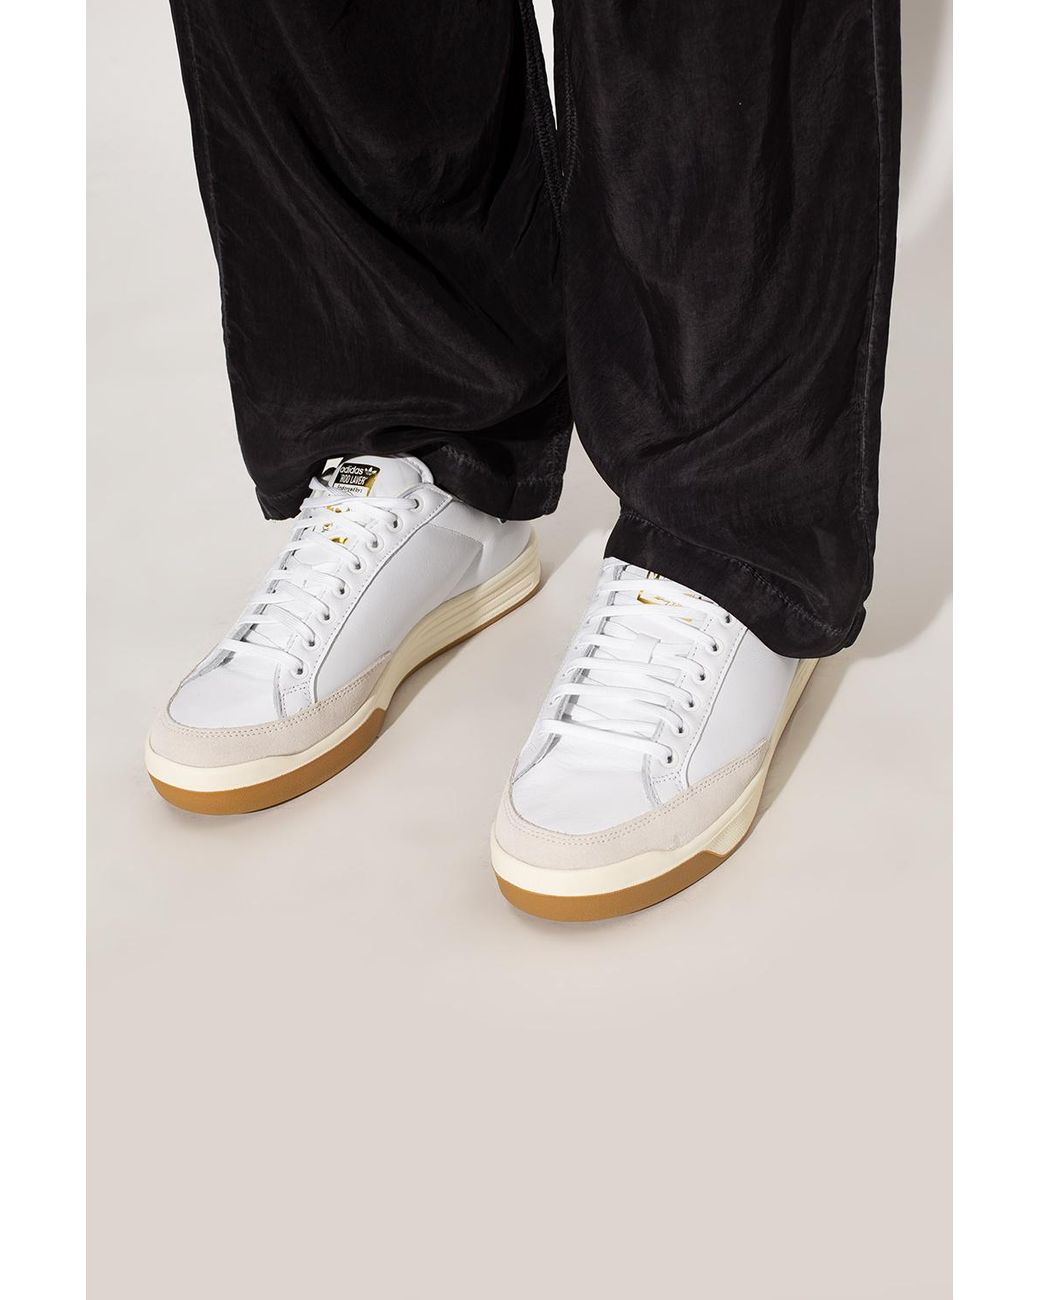 adidas Originals 'rod Laver' Sneakers in White for Men | Lyst